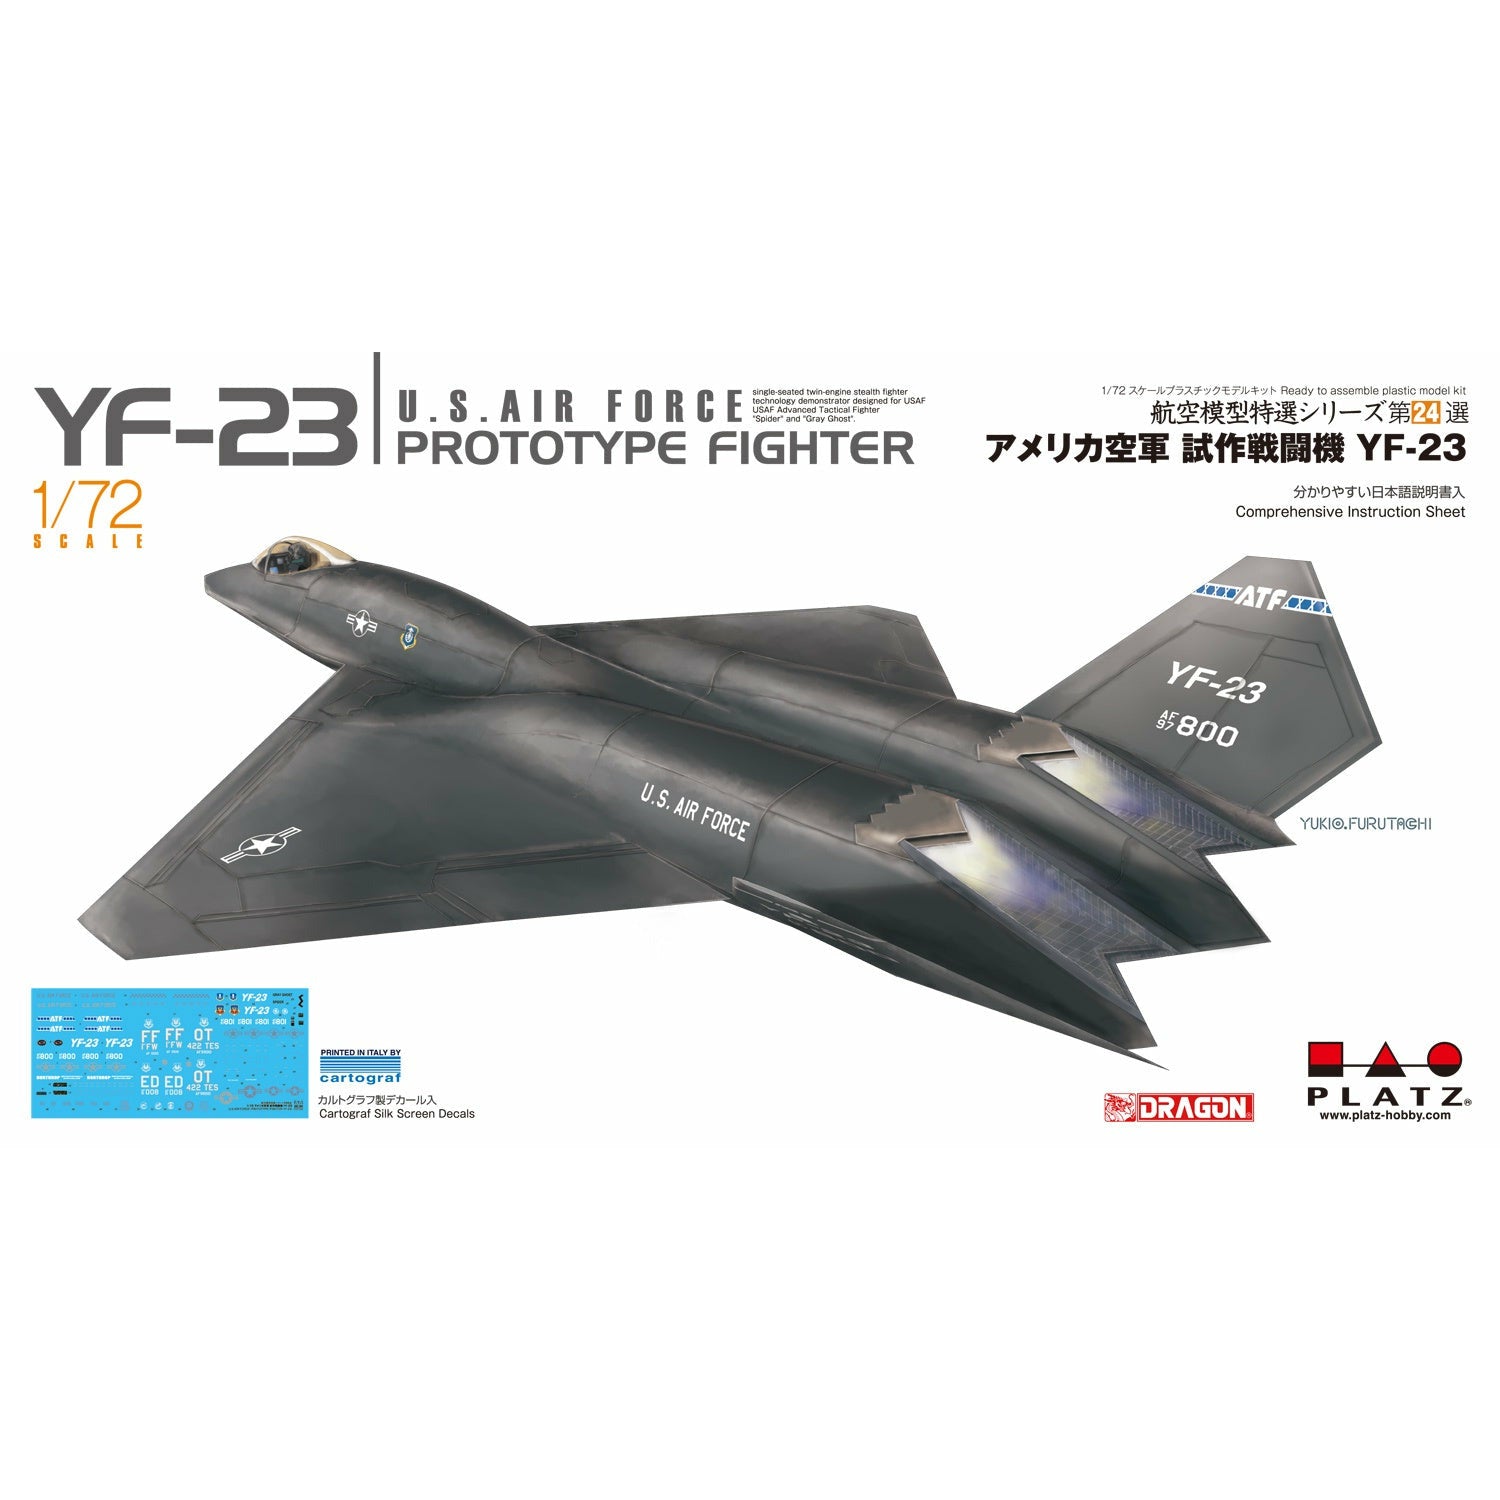 U.S.A.F. Prototype Fighter YF-23 1/72 #AE-24 by Platz